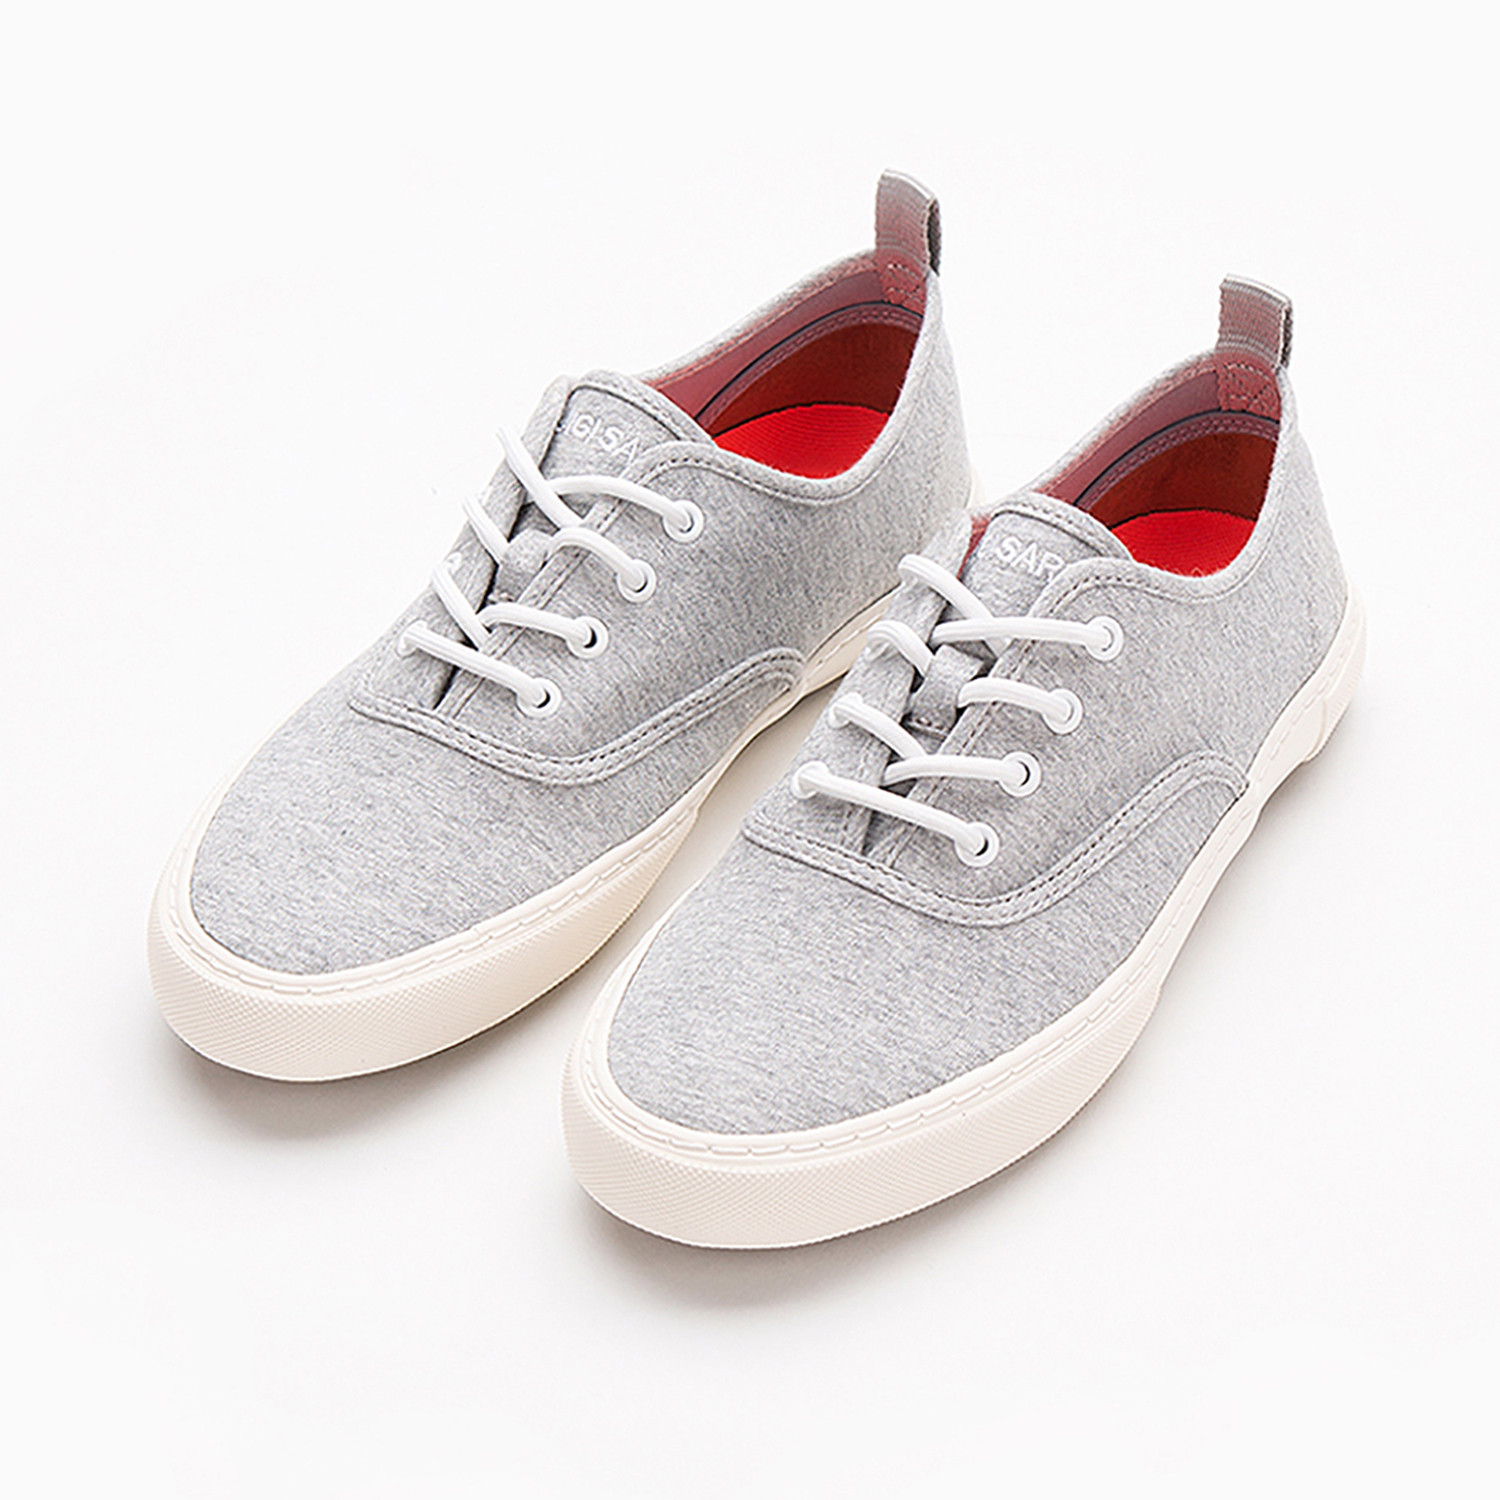 heather gray sneakers